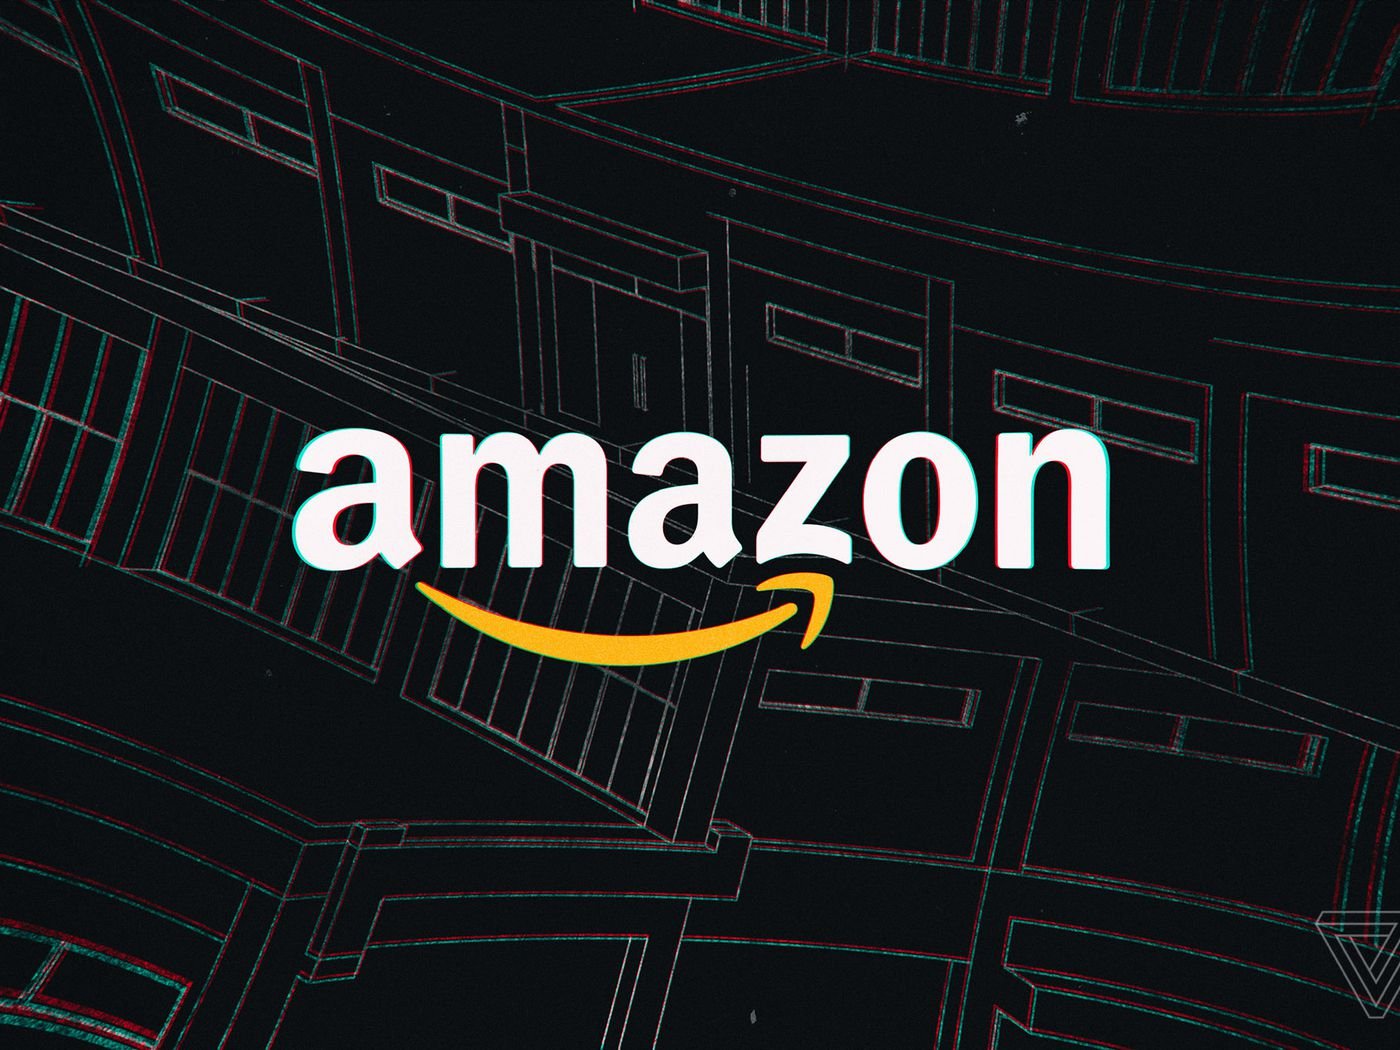 Amazon e commerce company all about amazon..